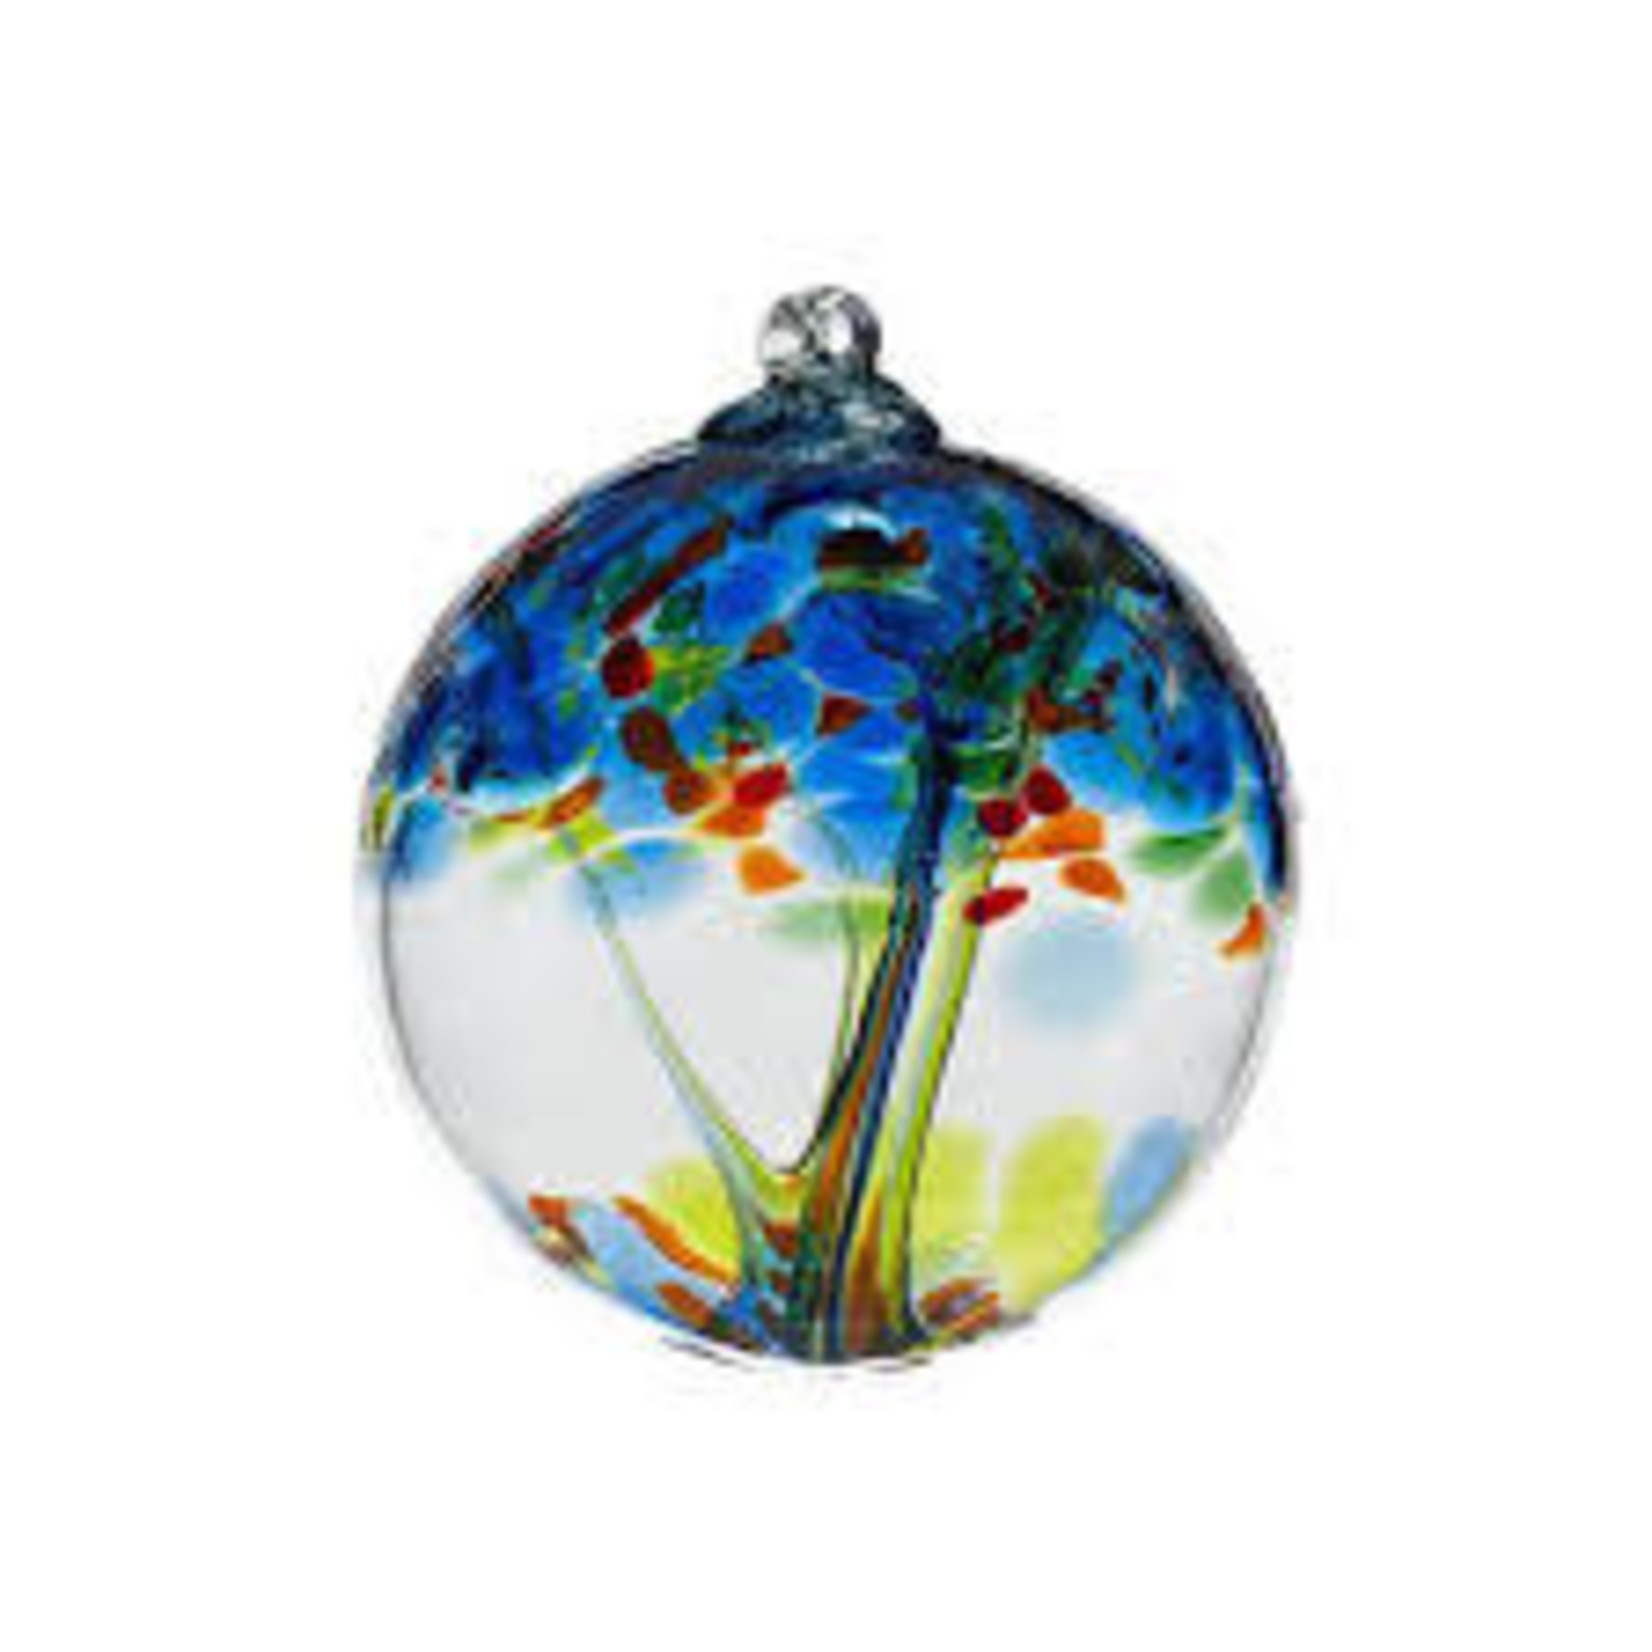 Kitras Art Glass DREAMS (Trees of Enchantment, 2" D., KITRAS)